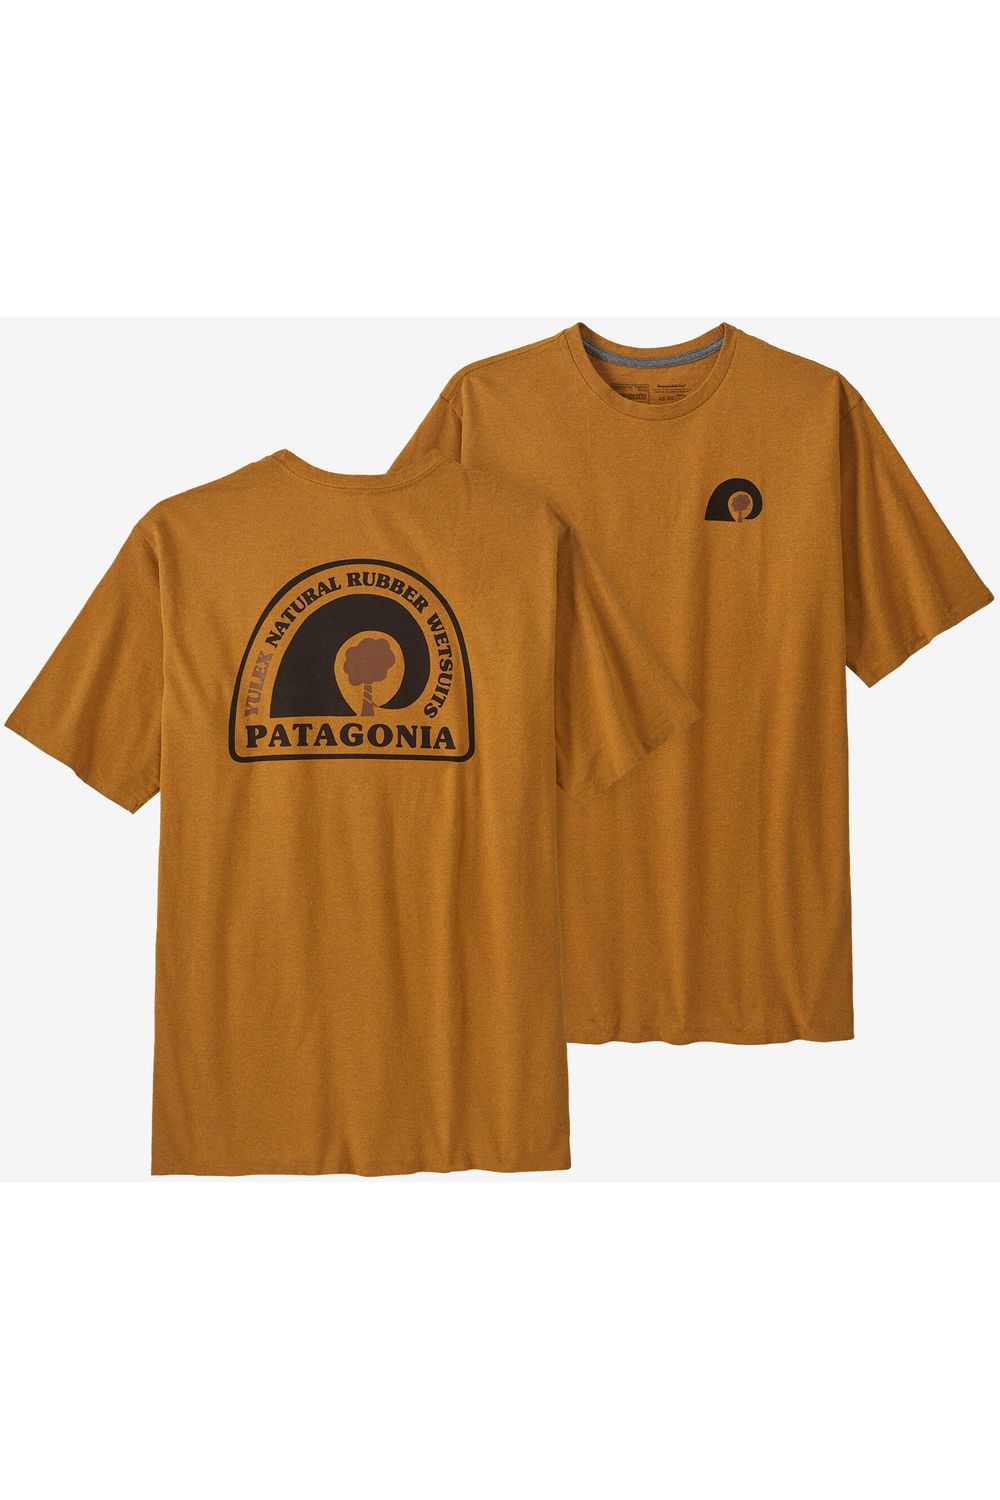 Patagonia Rubber Tree Mark Responsibili T-Shirt Dried Mango